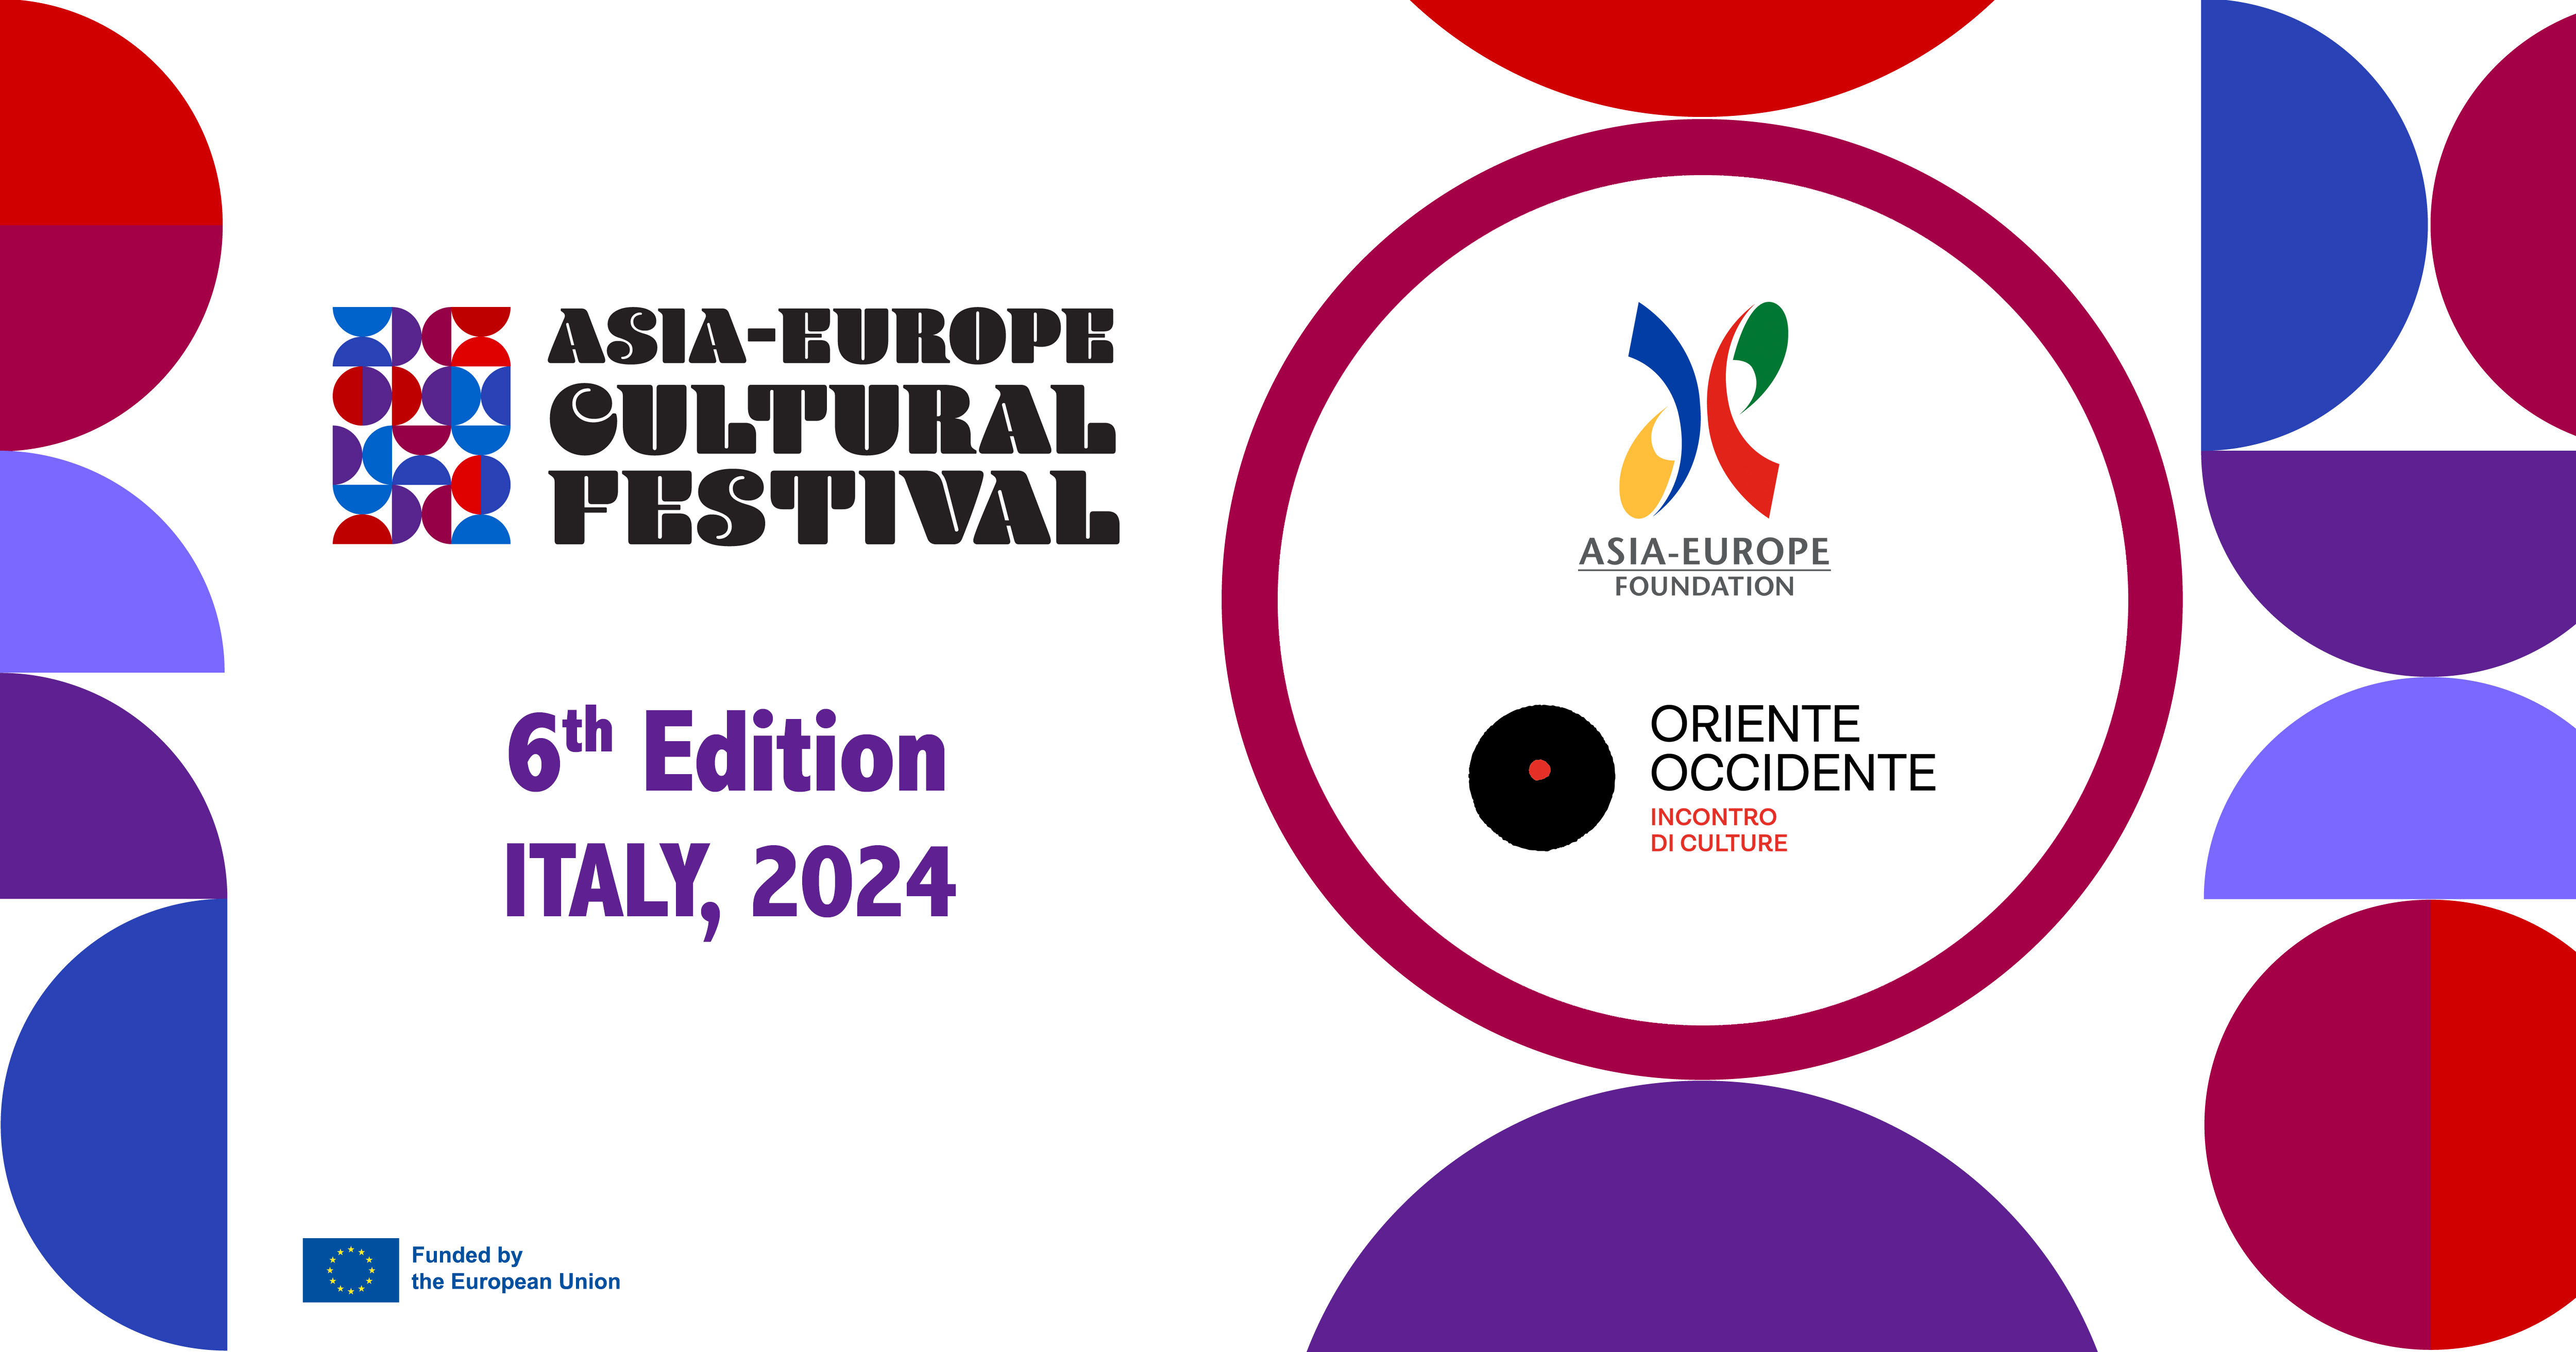 Asia-Europe Cultural Festival - Partnership announcement